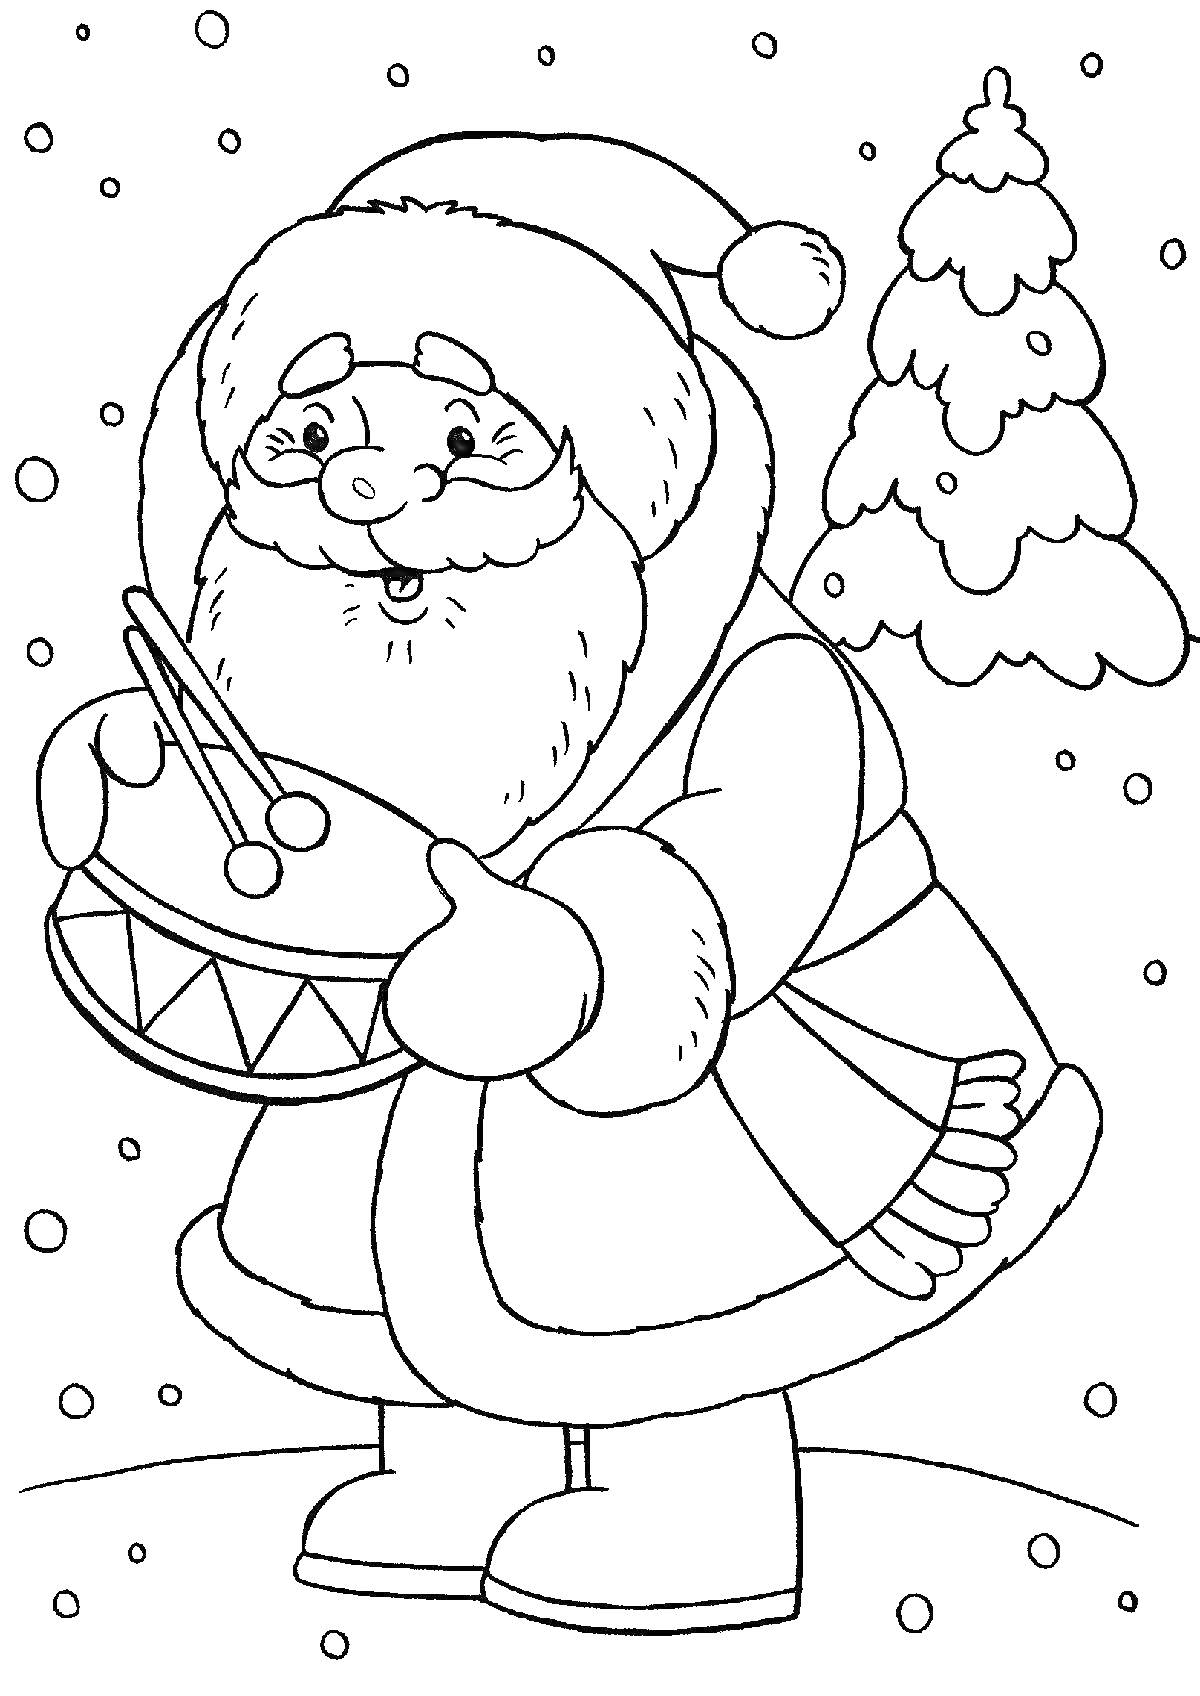 Раскраска Дед Мороз с барабаном на фоне снегопада и ёлки